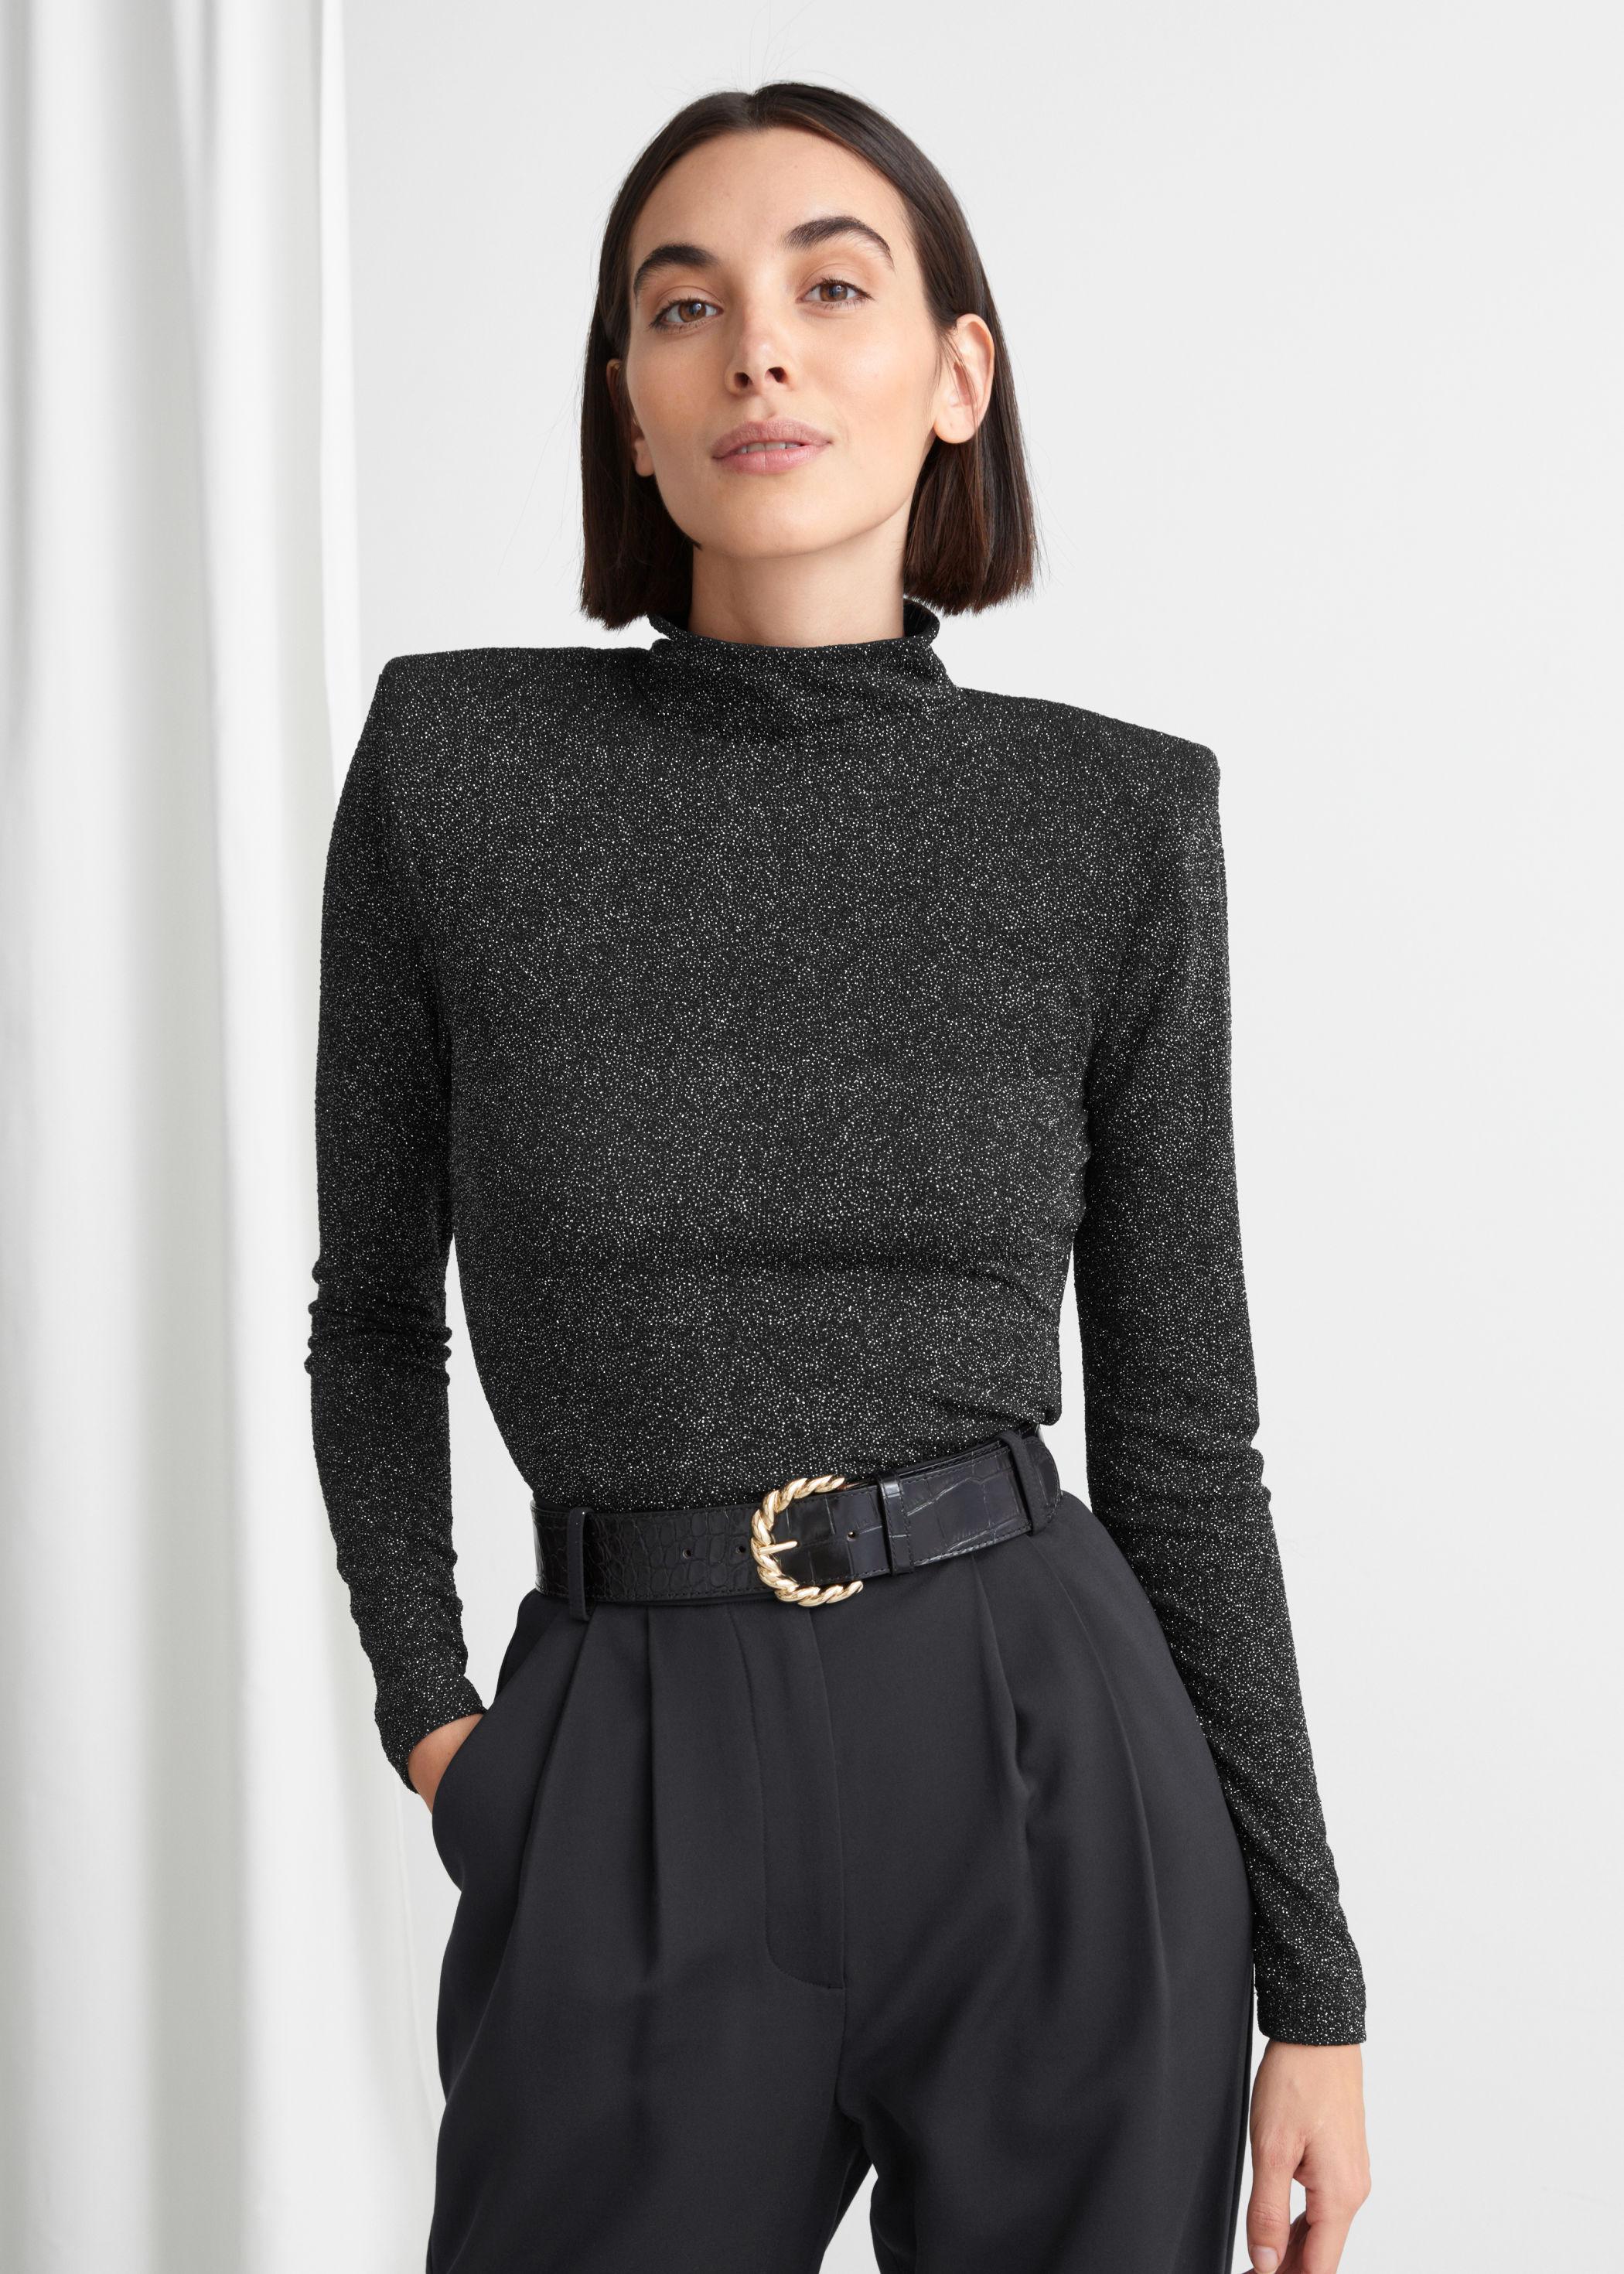 BlingGlri Womens Fashion Knit Turtleneck Knit Beaded Sweater